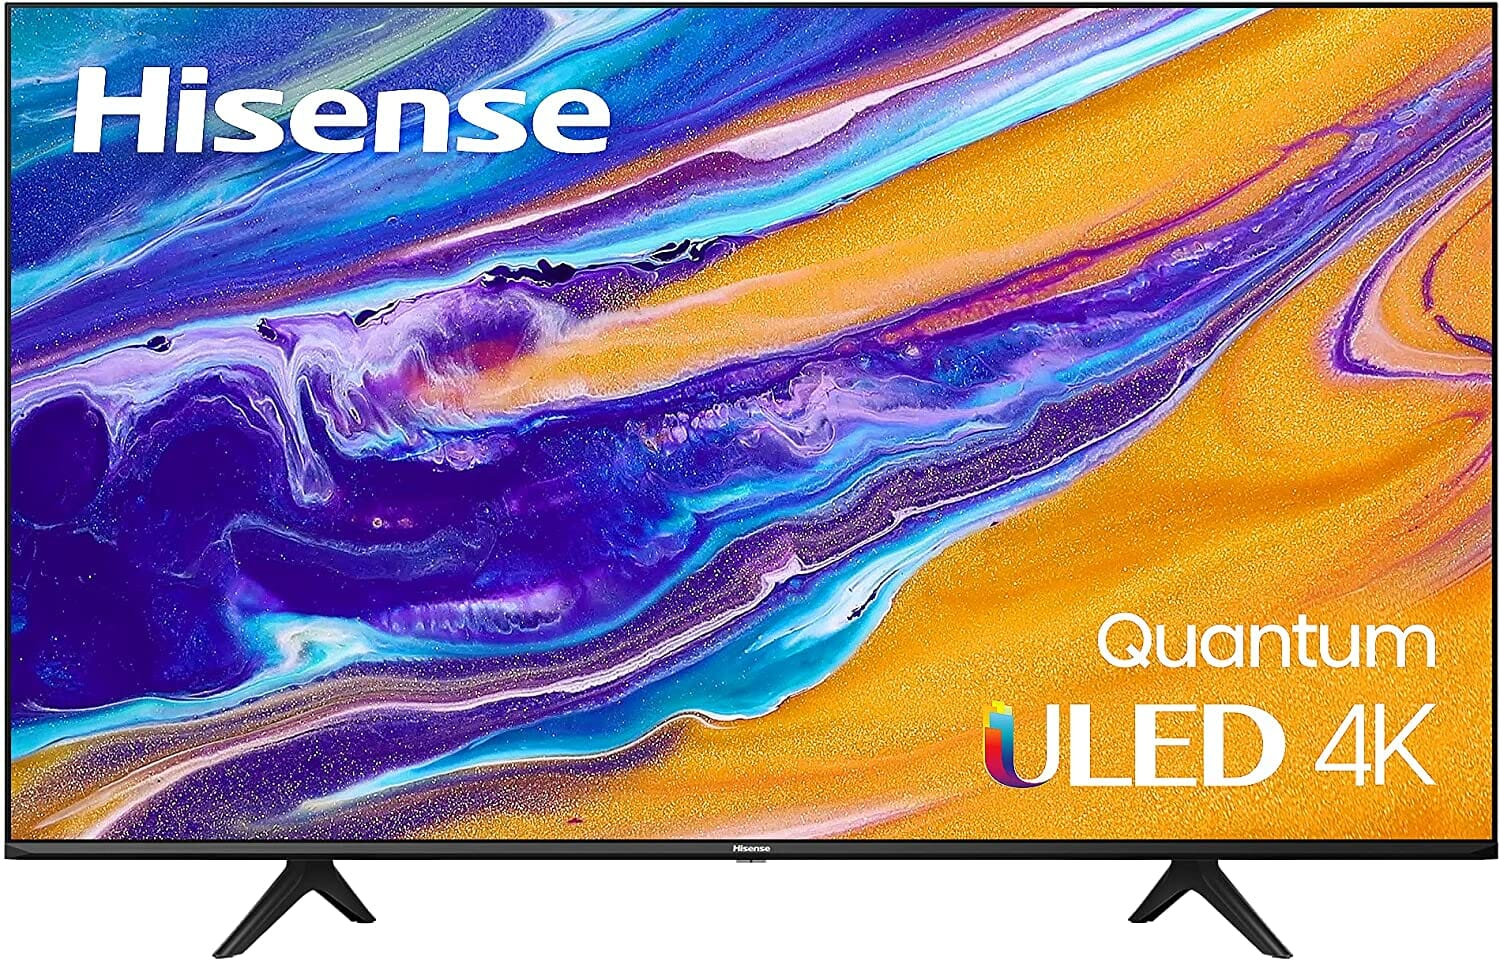  Hisense ULED 4K Premium 50U6G Quantum Dot QLED Series 50-Inch Android Smart TV